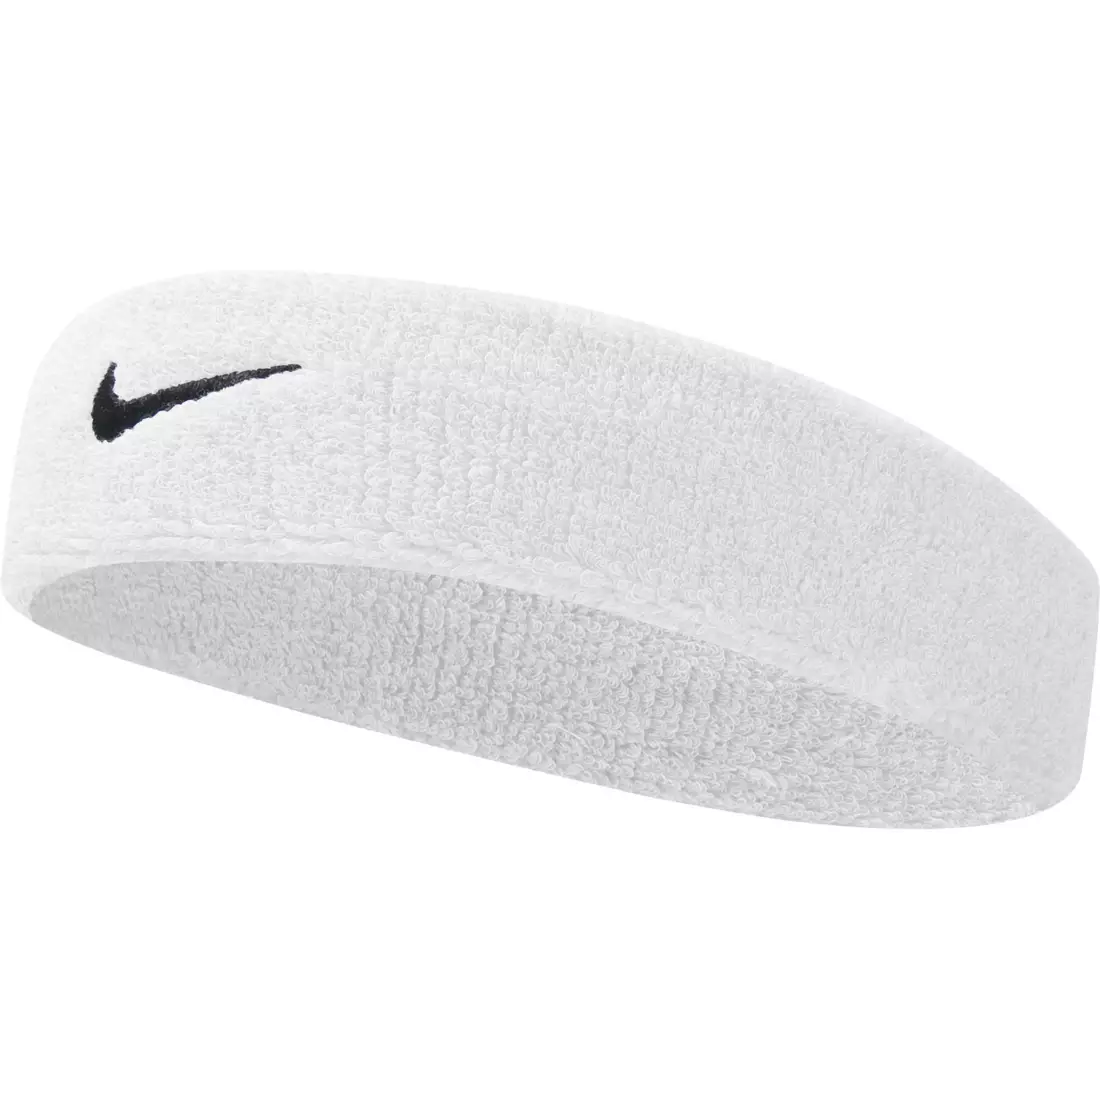 Nike Headband - White/Black - Soccer Shop USA